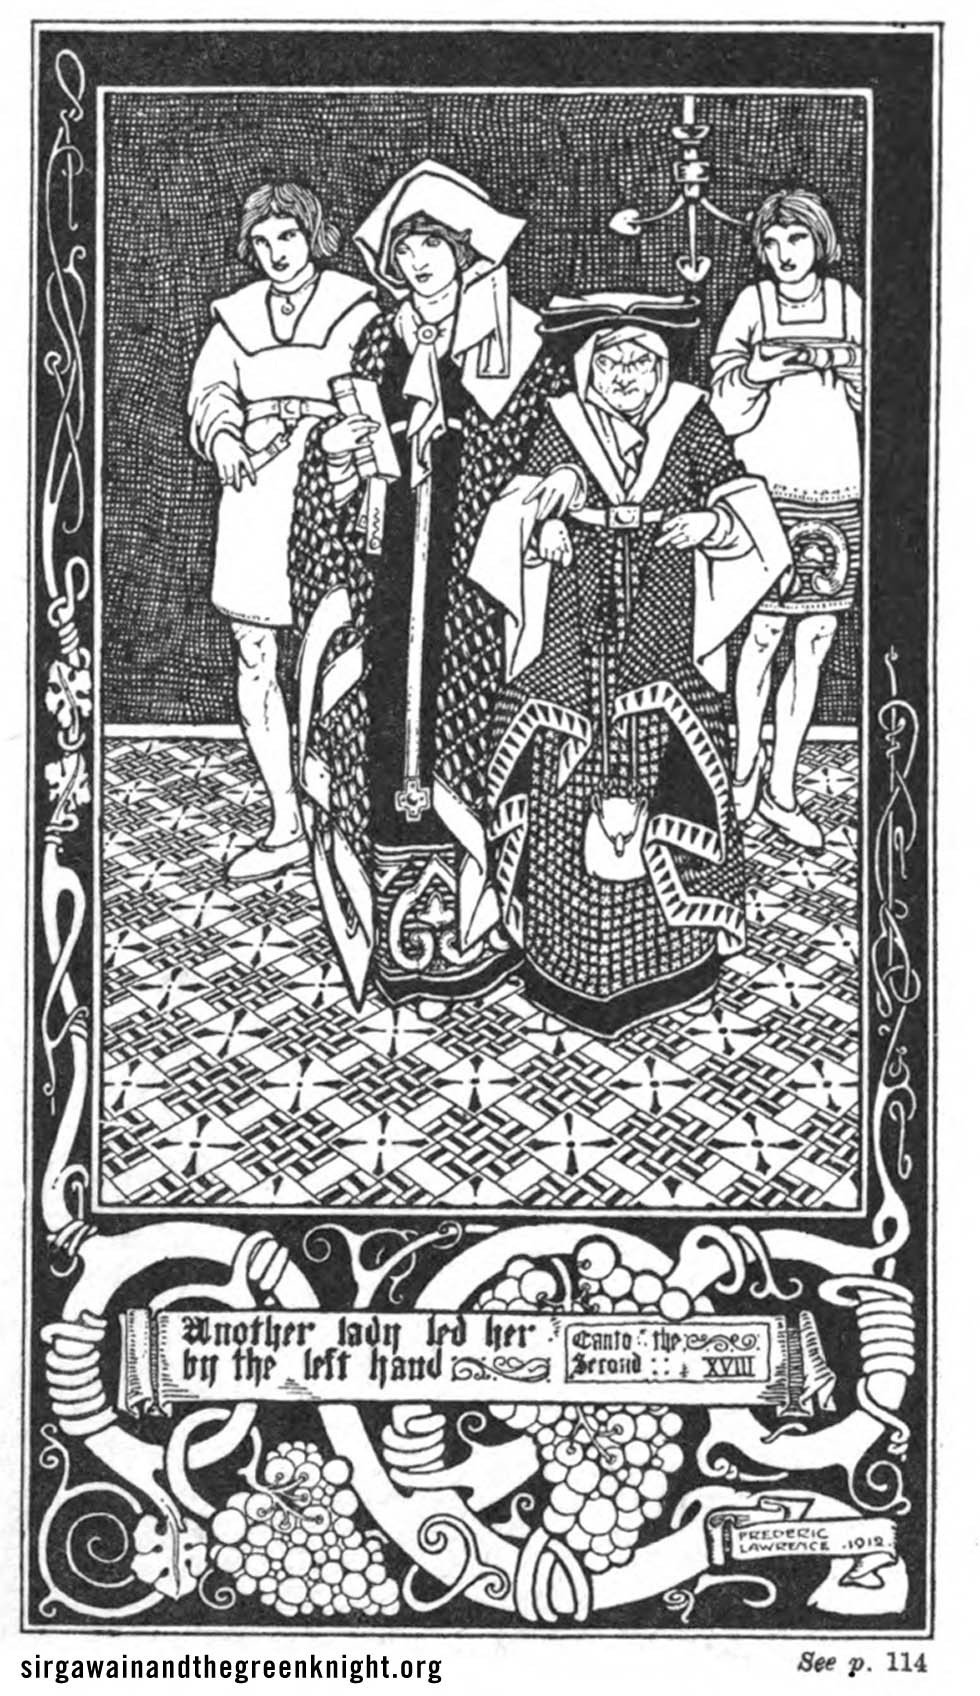 Sir Gawain and the Green Knight Book Illustration 1915